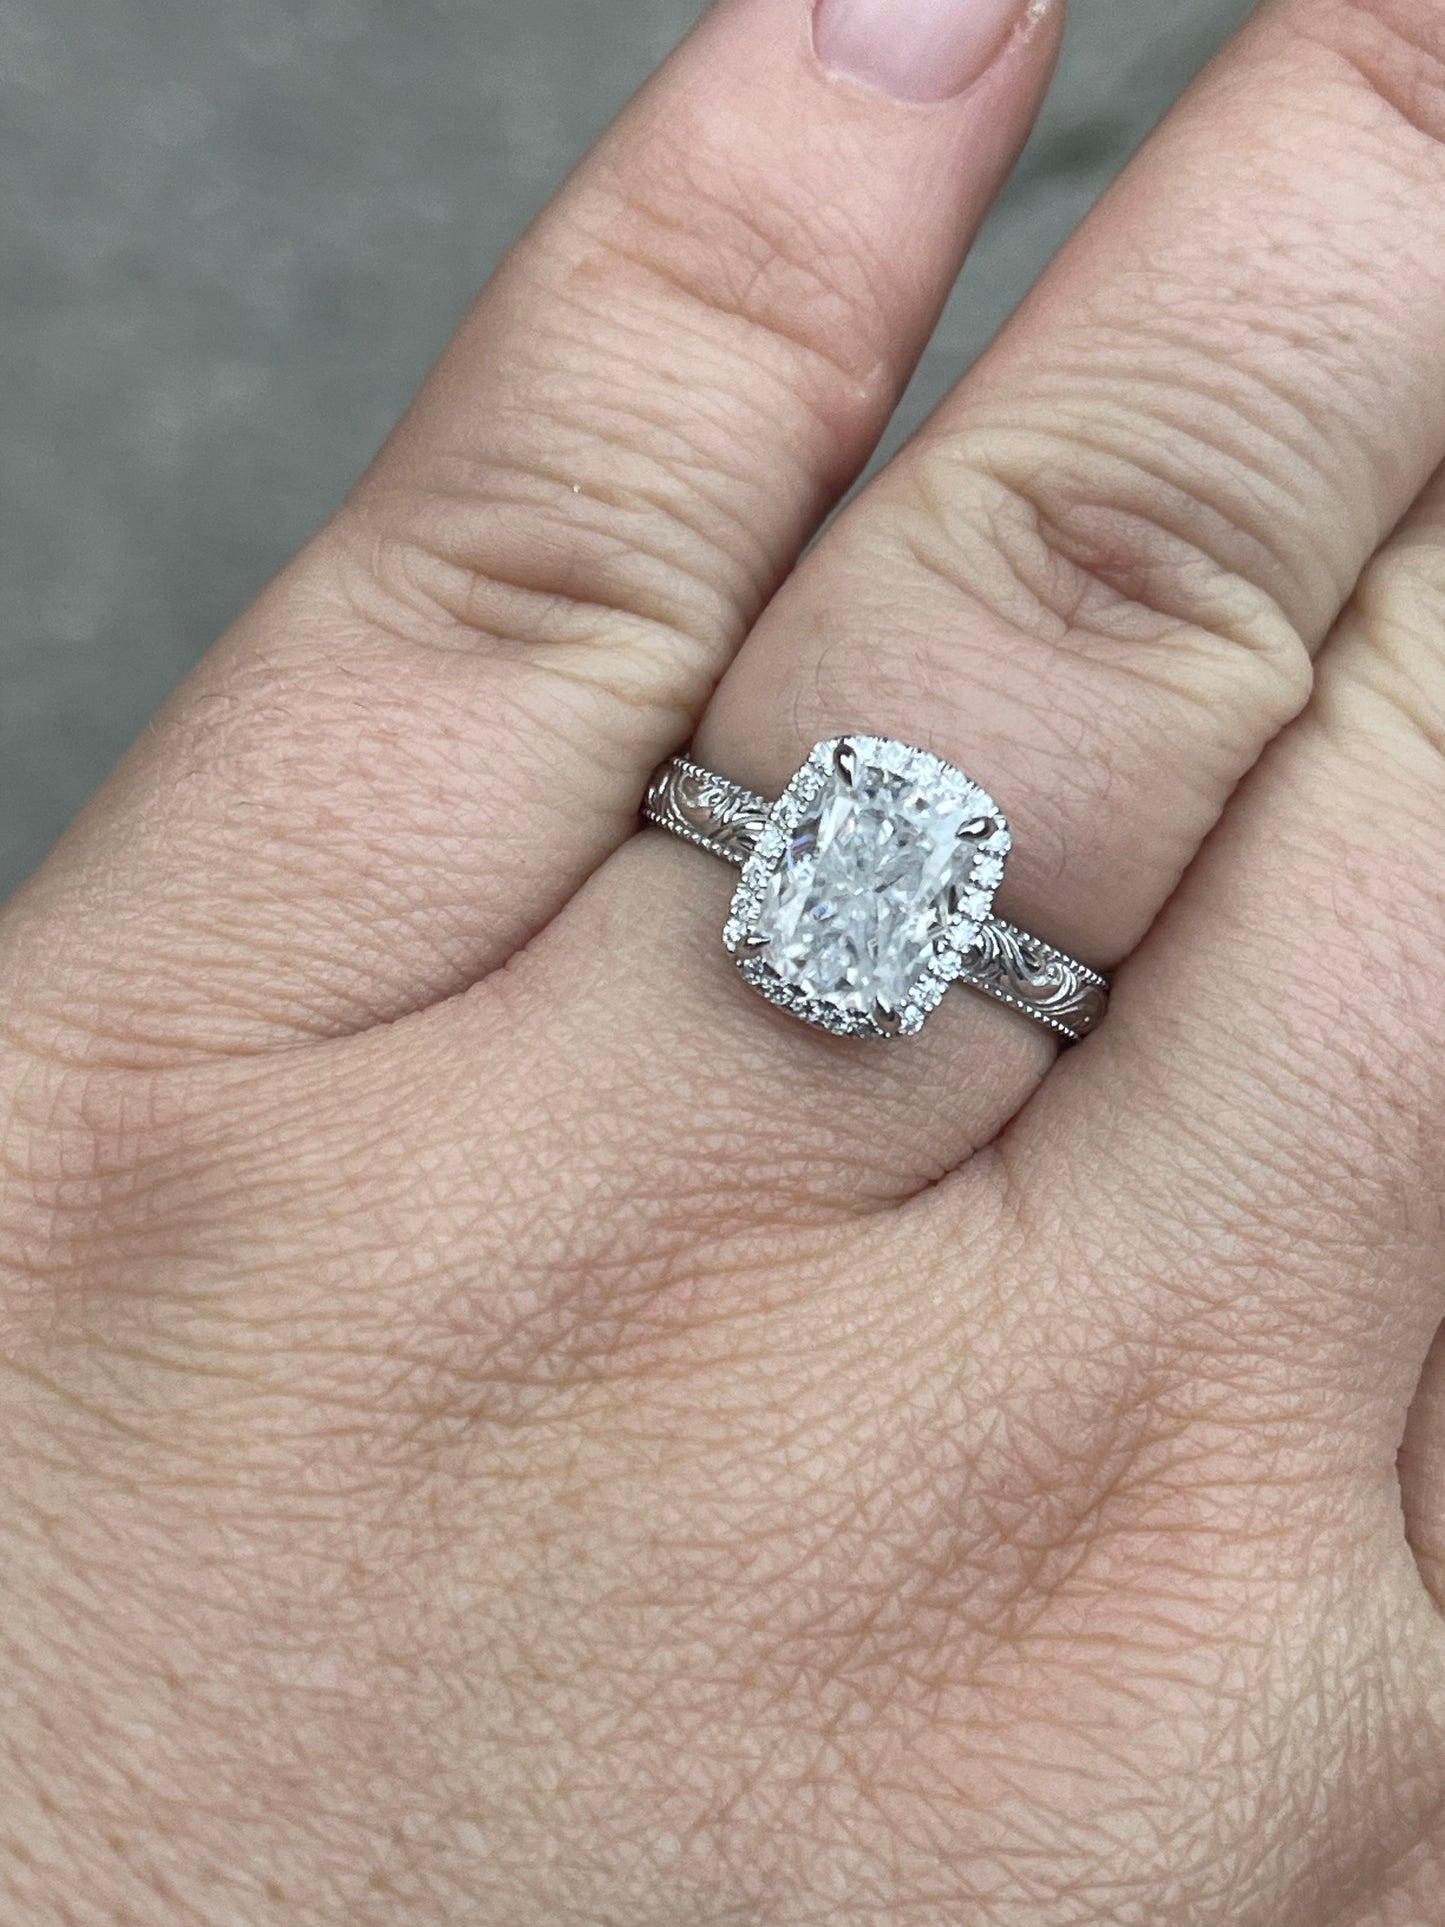 Aspen Sterling Silver Engagement Ring